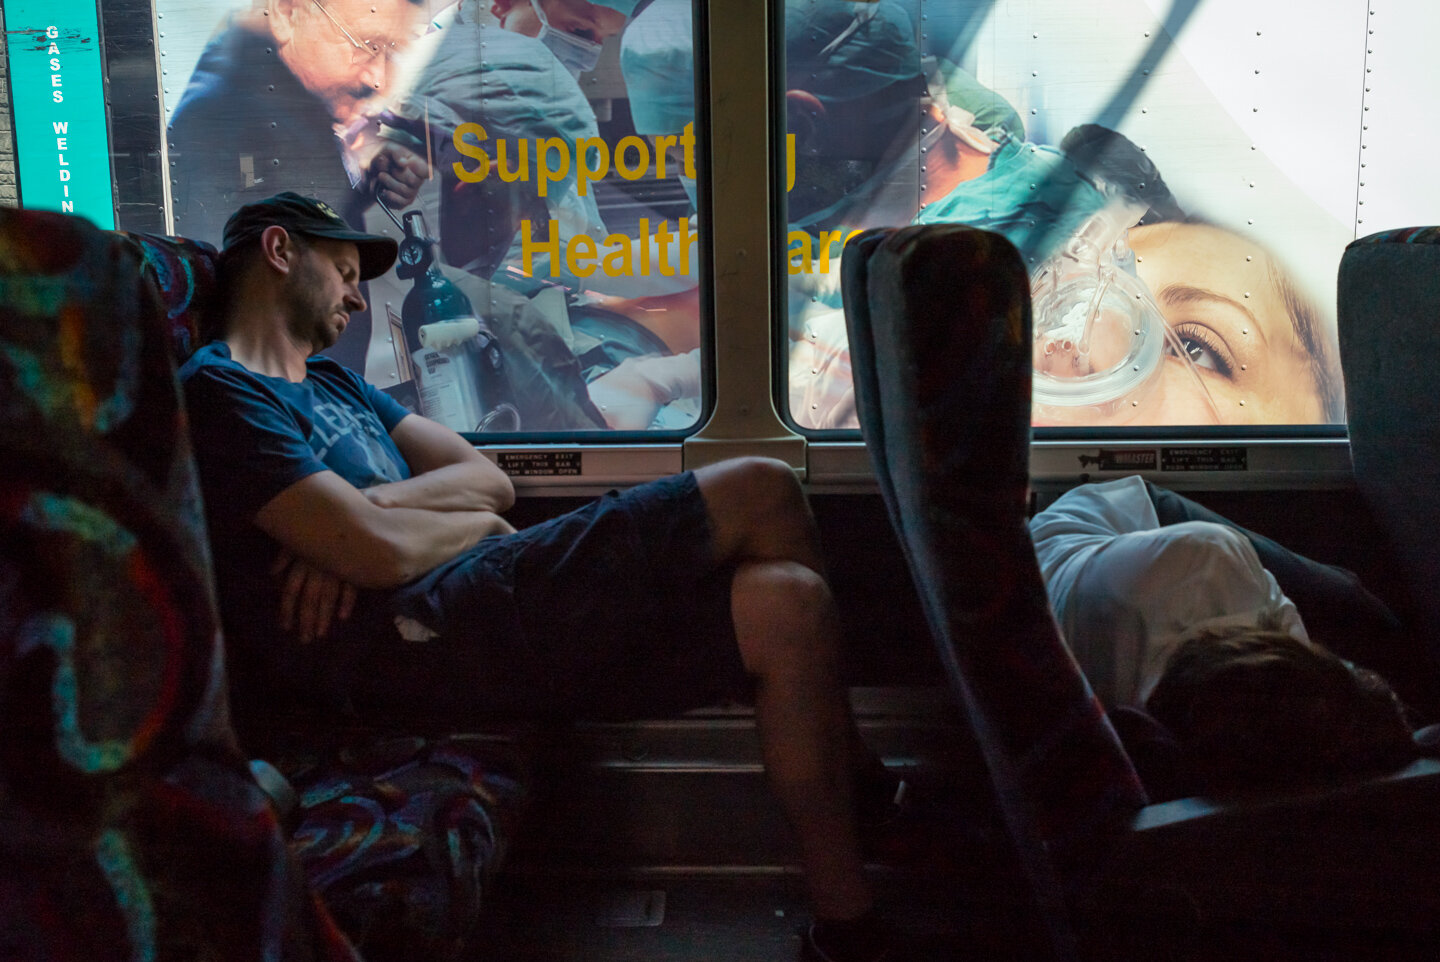 Man Sleeping on a Bus. The Bronx, New York 2014